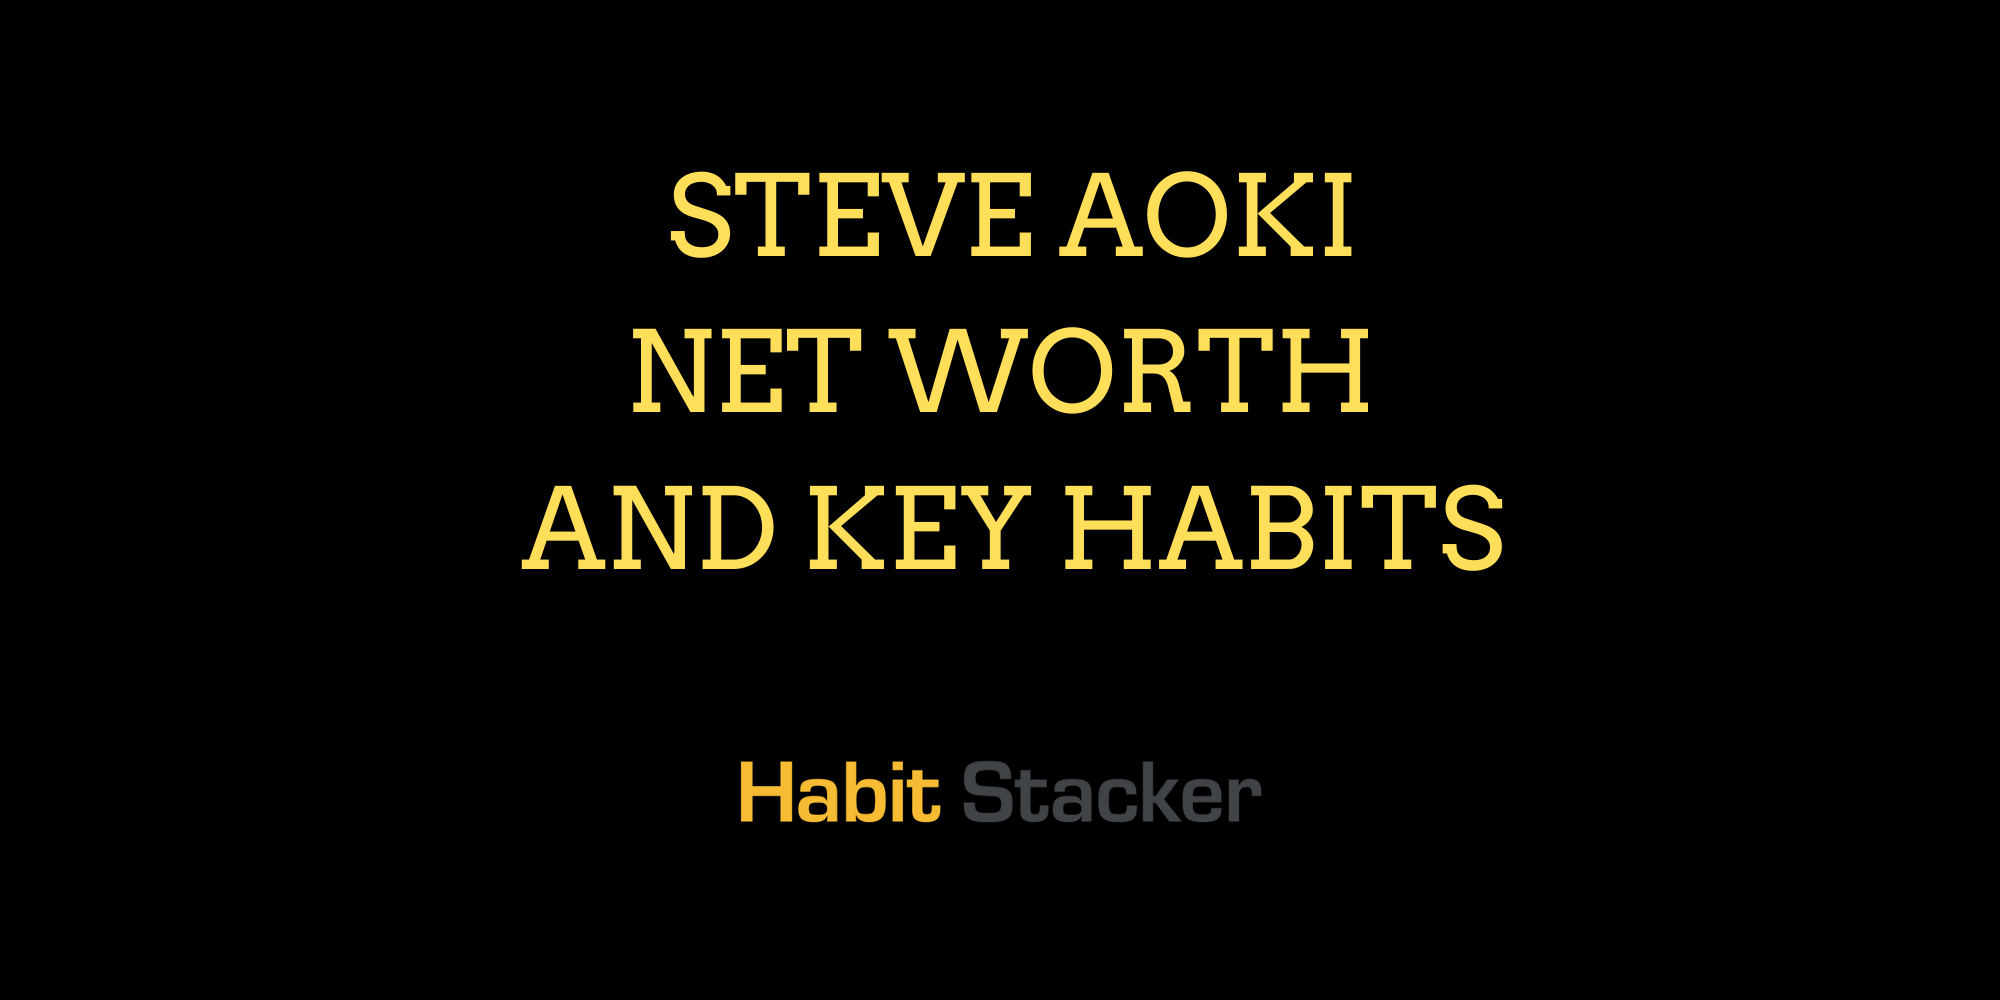 Steve Aoki Net Worth